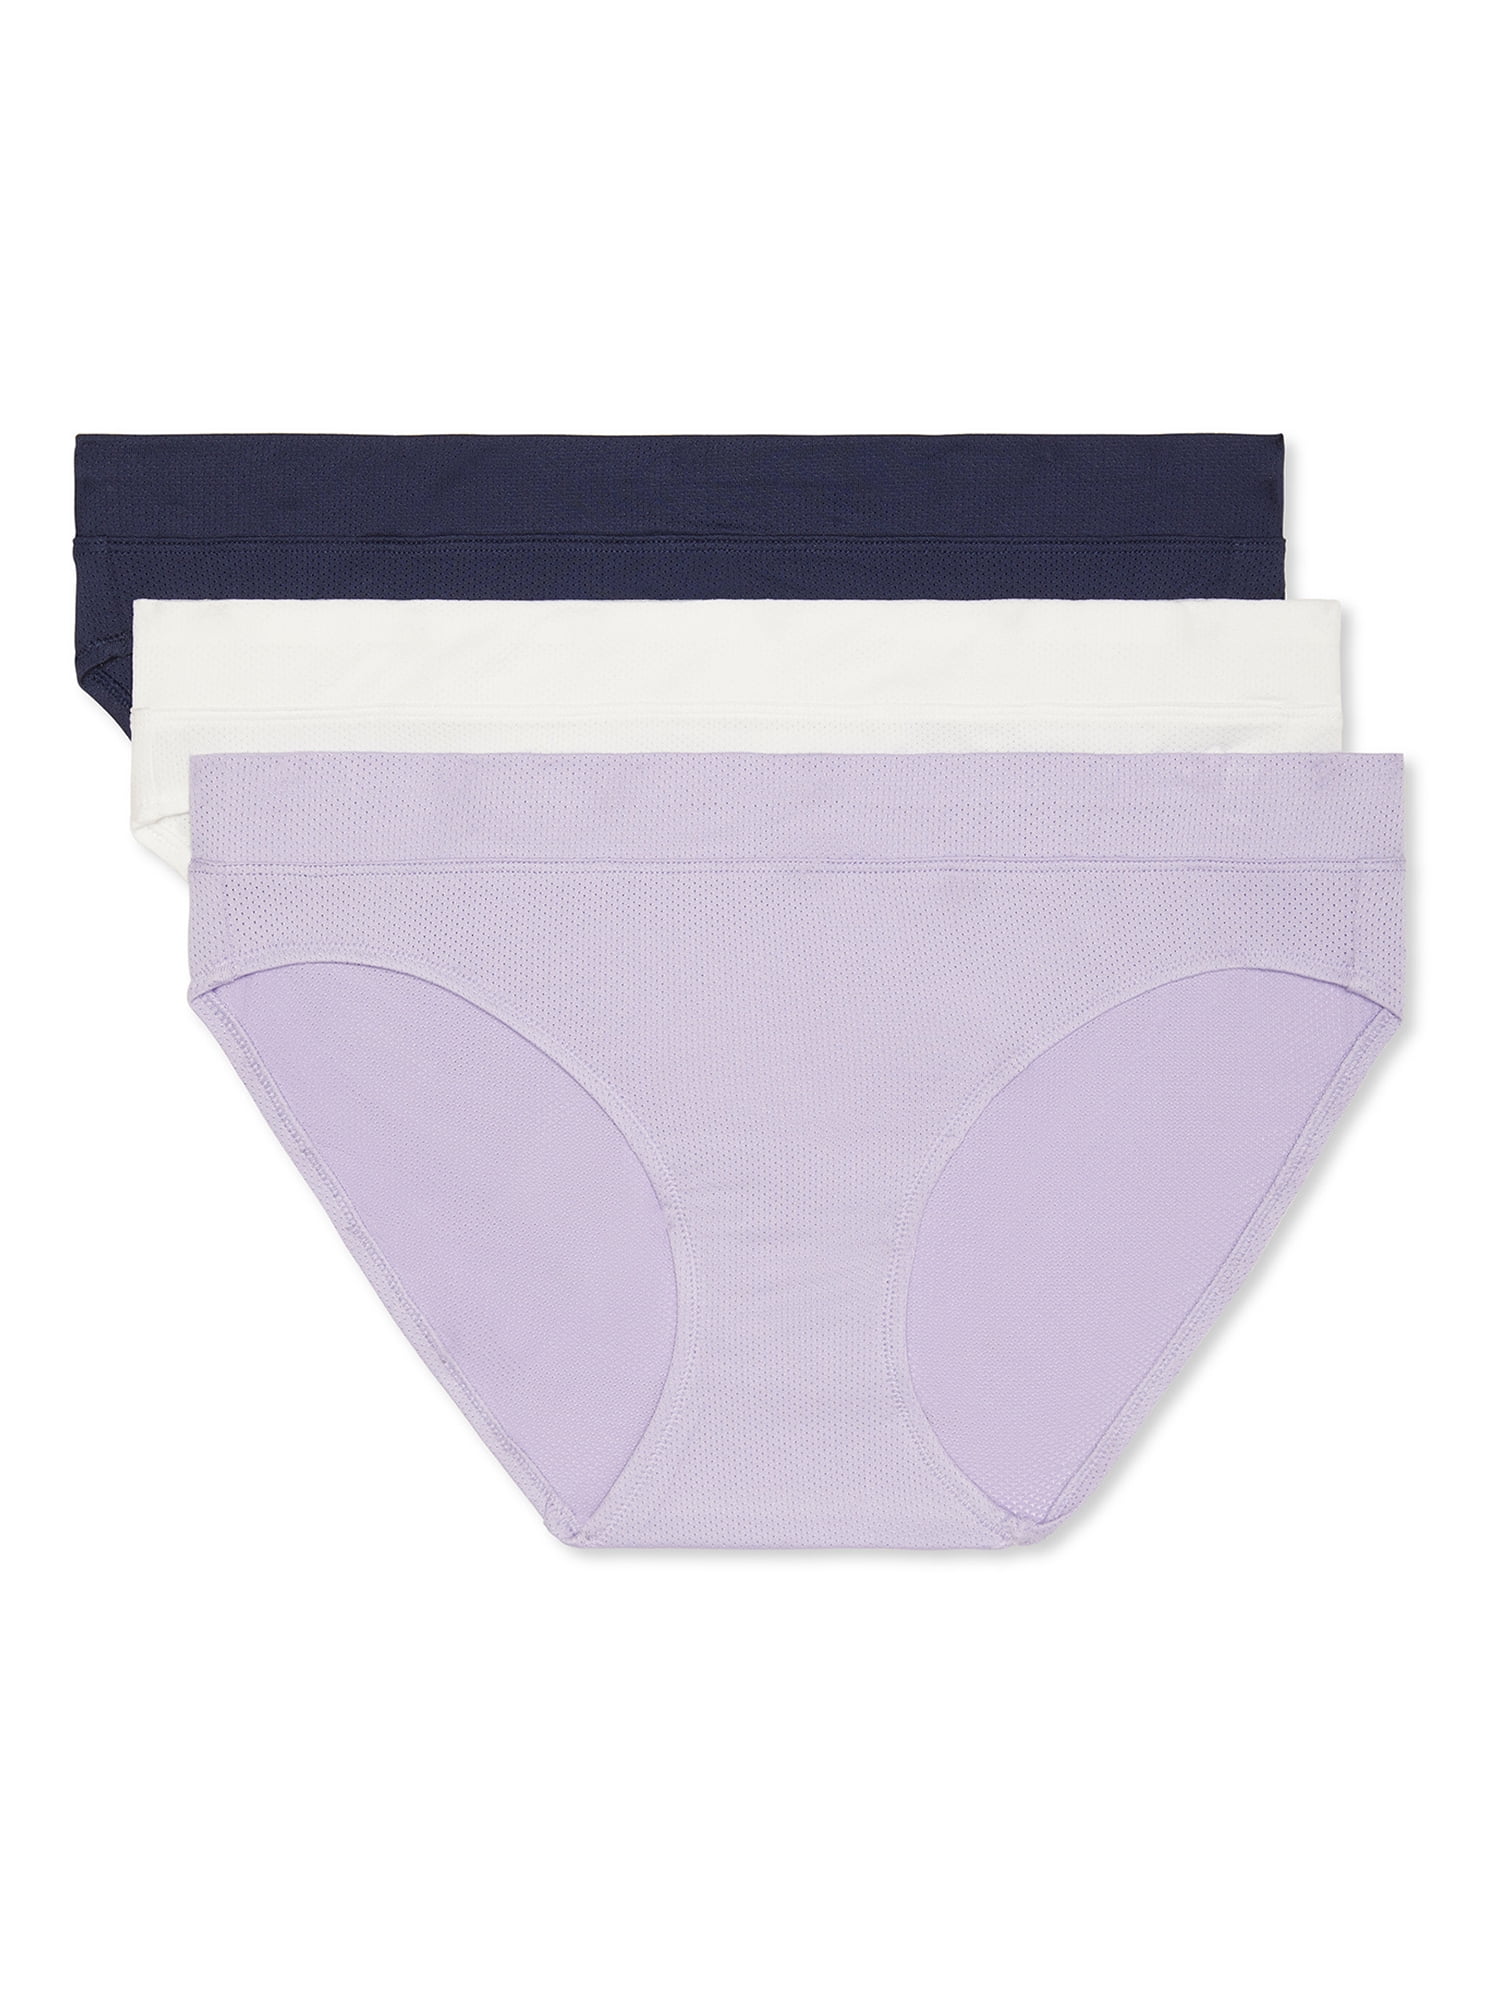 Warner's womens Blissful Benefits Moisture-wicking 3-pack Rv4973w Bikini  Style Underwear, Lavender Macaron White Navy Ink, Large US at   Women's Clothing store